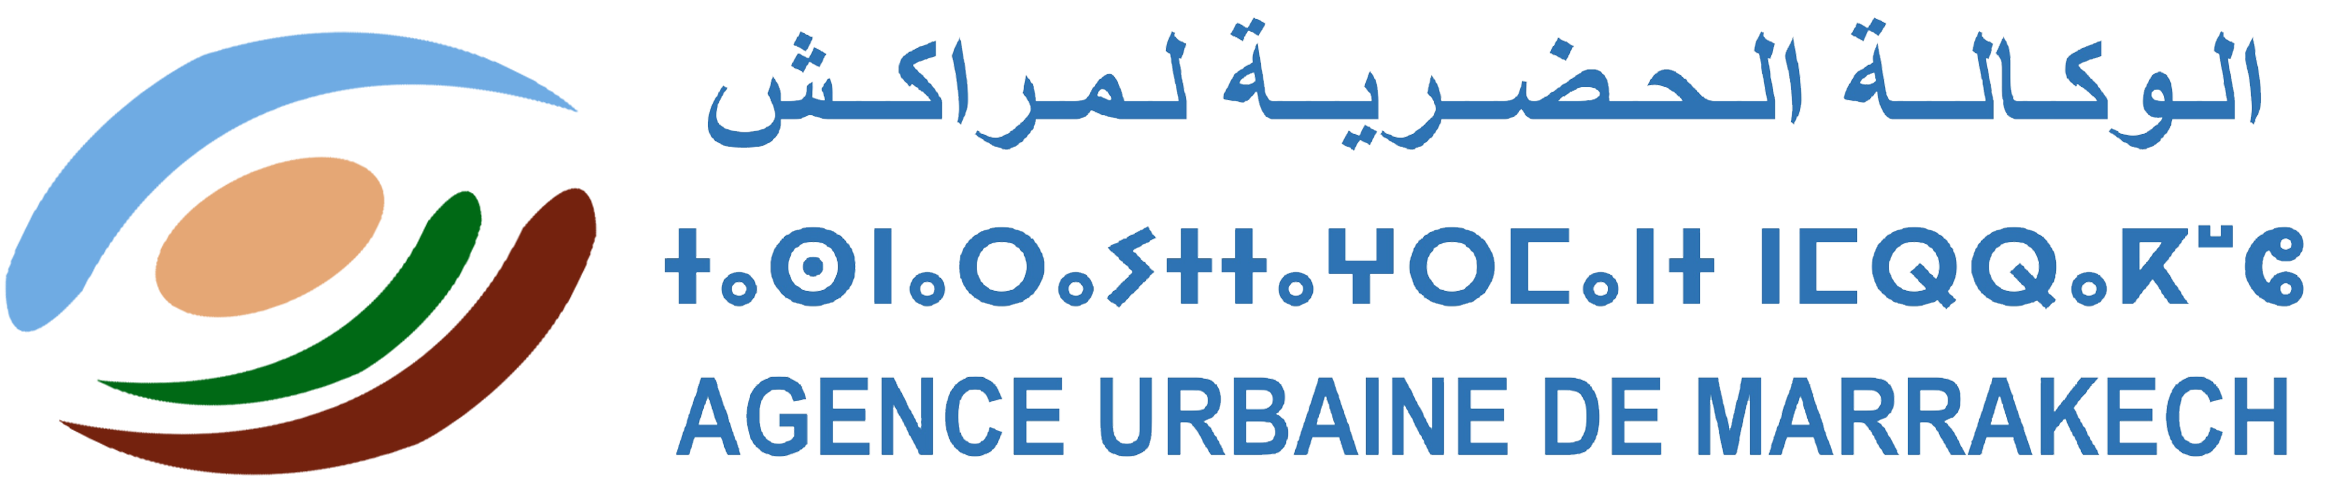 Agence Urbaine de Marrakech - AUM